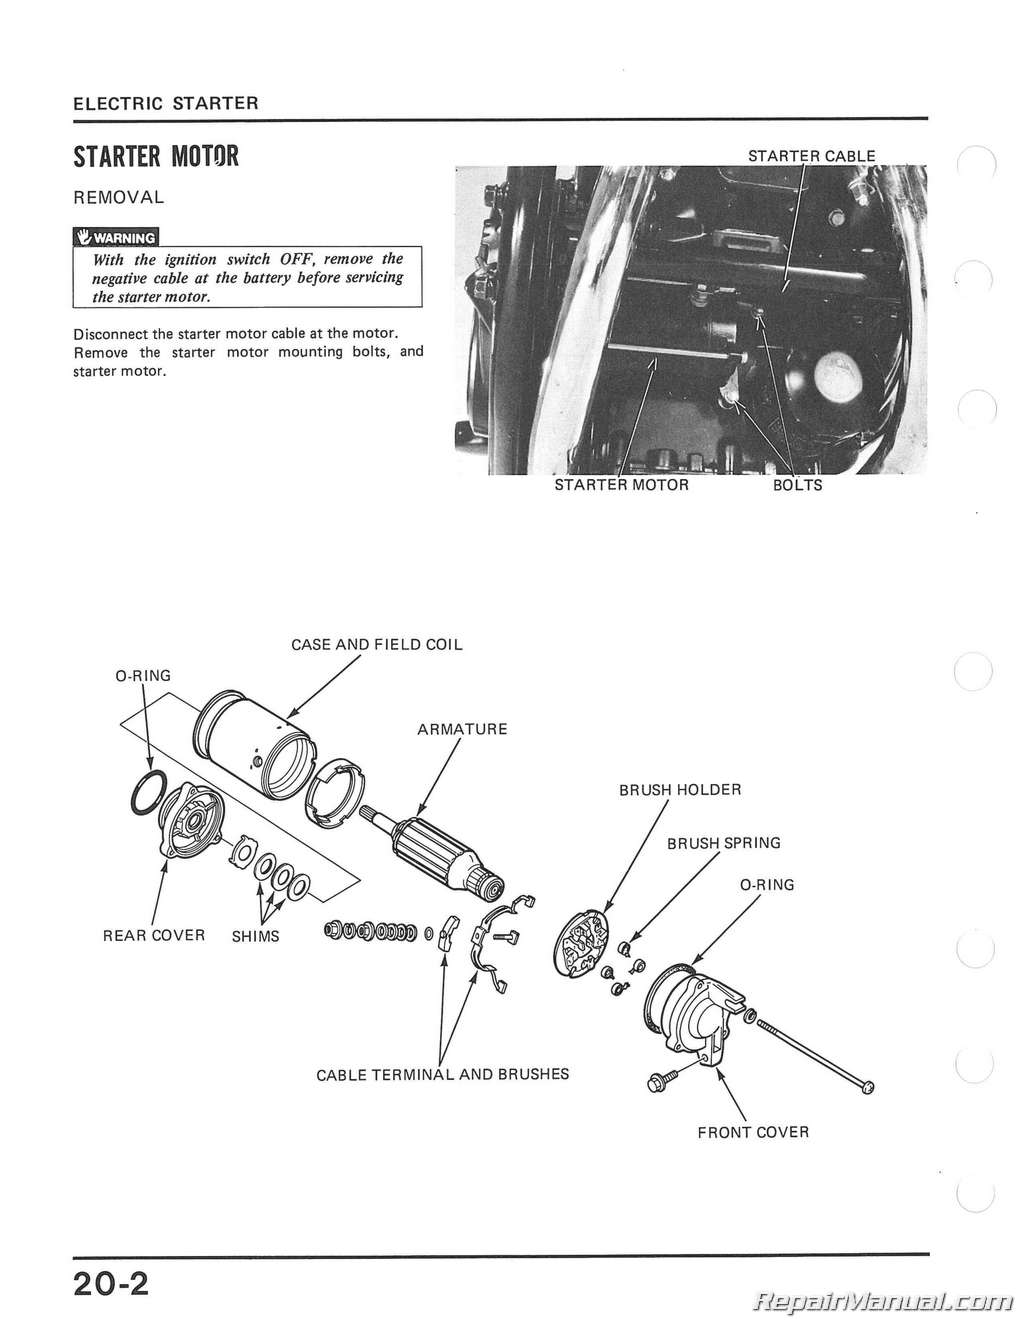 1982 Honda magna v45 750 manual pdf #7